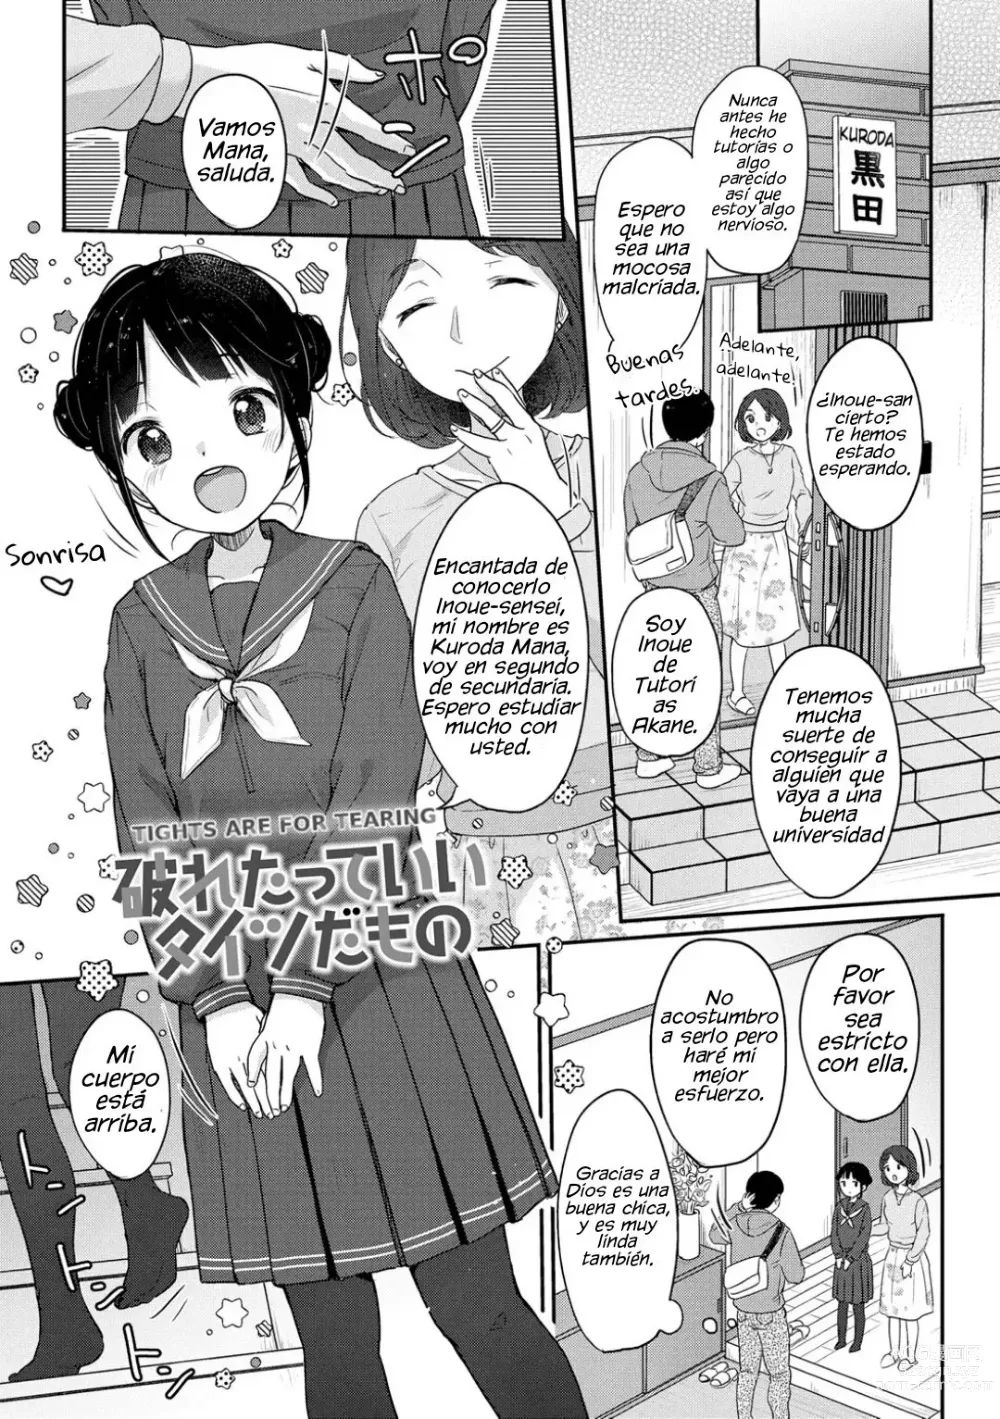 Page 6 of manga Chuco Chuco Muchu